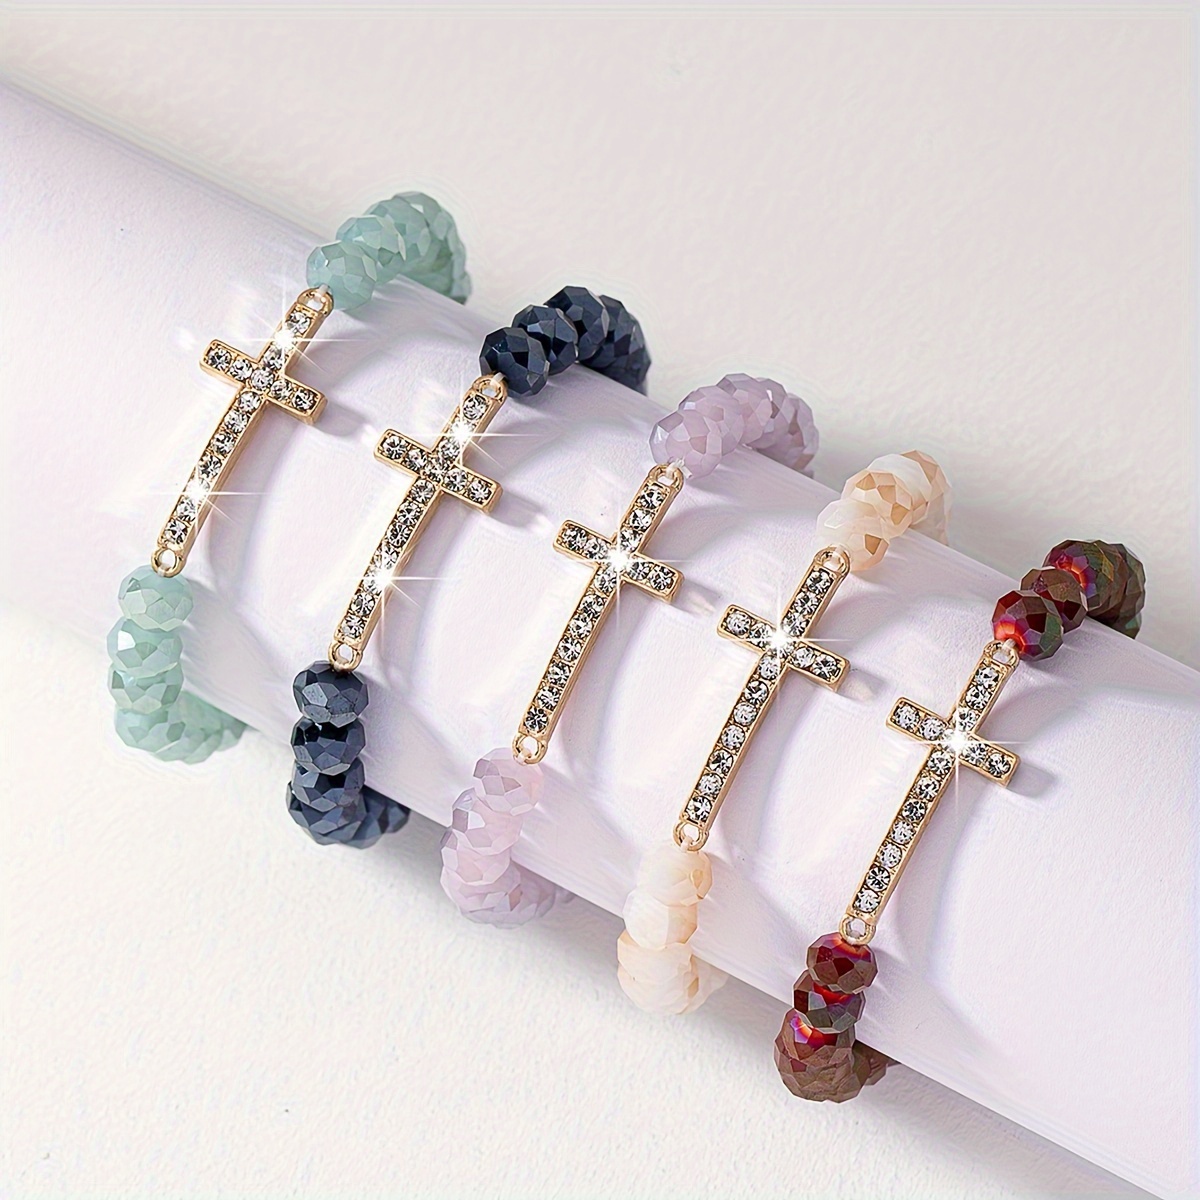 

1 Pcs Of Colorful Rhinestone Beads Beaded Bracelet With Cross Design Elegant Vintage Style For Women Bracelet Gift